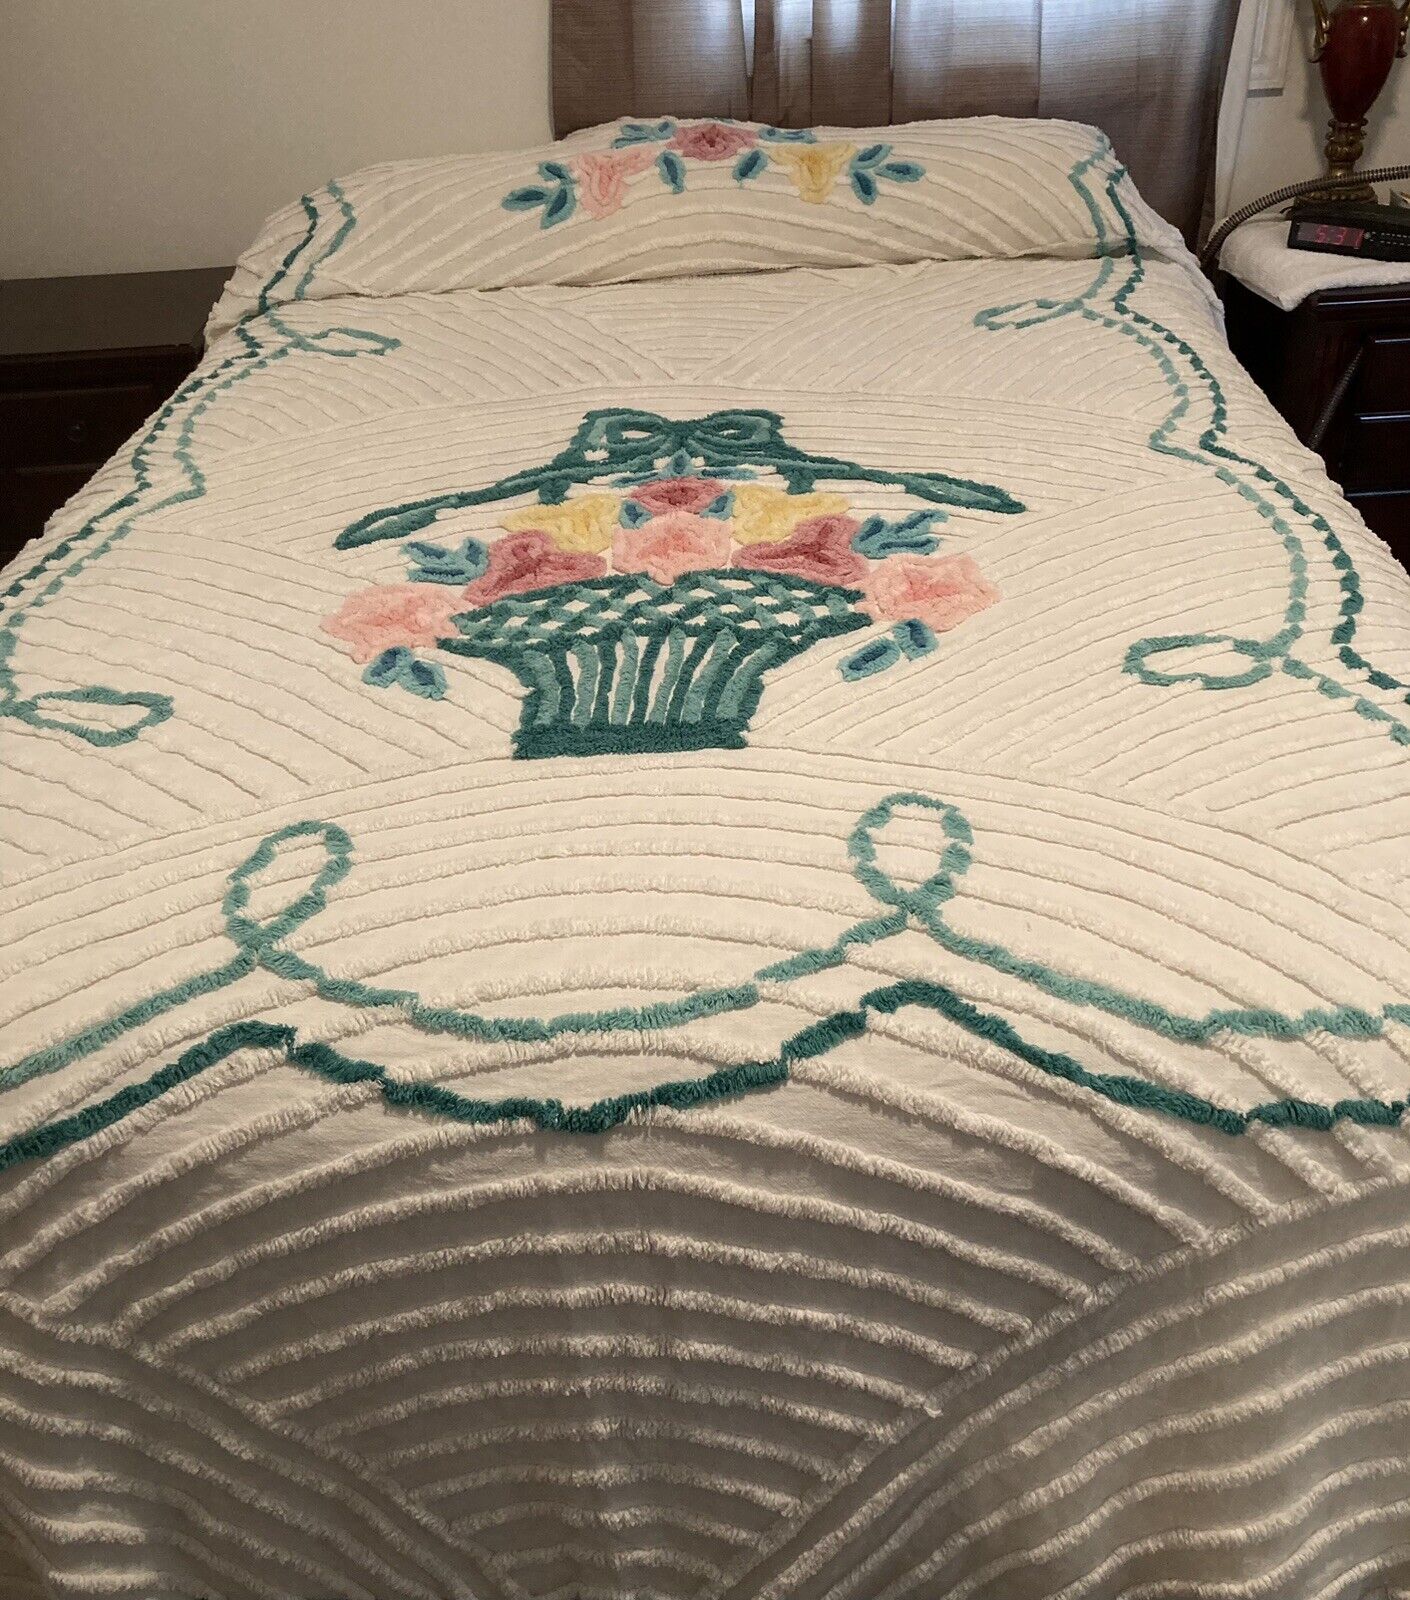 Vintage gorgeous Chenille bedspread floral basket teal greens, 86x100  NICE